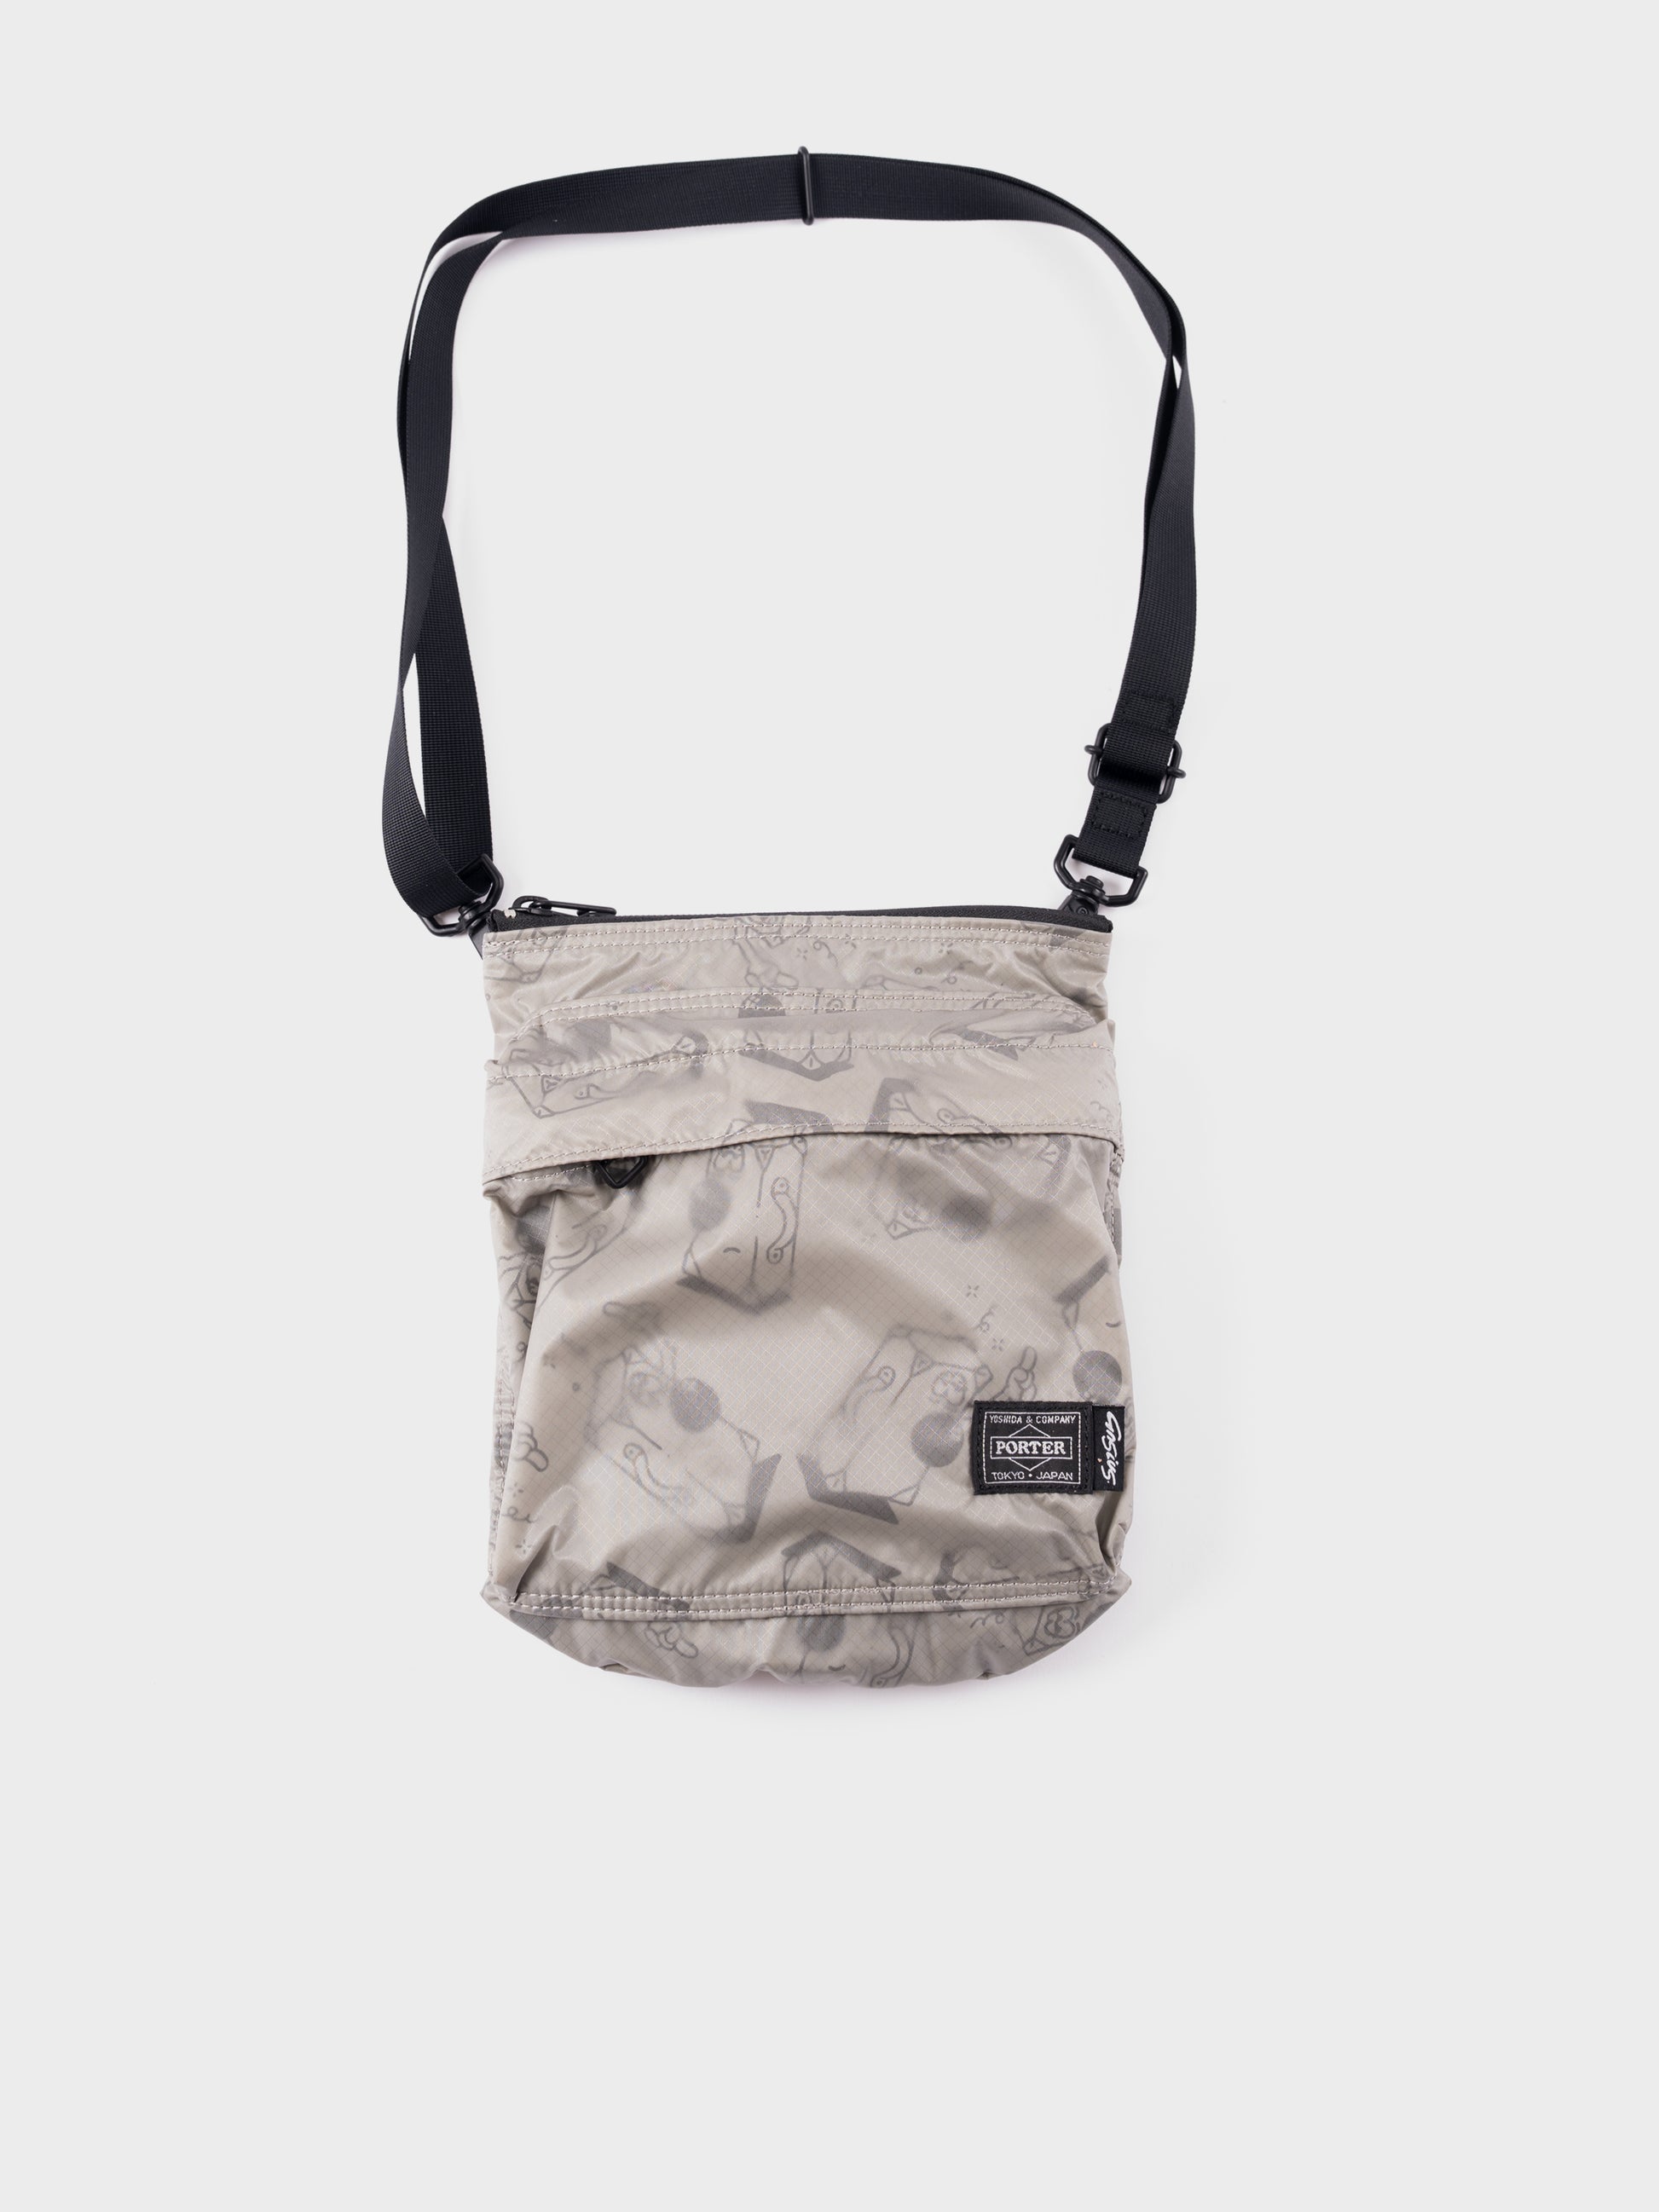 Porter-Yoshida & Co X Gasius Shoulder Bag - Grey